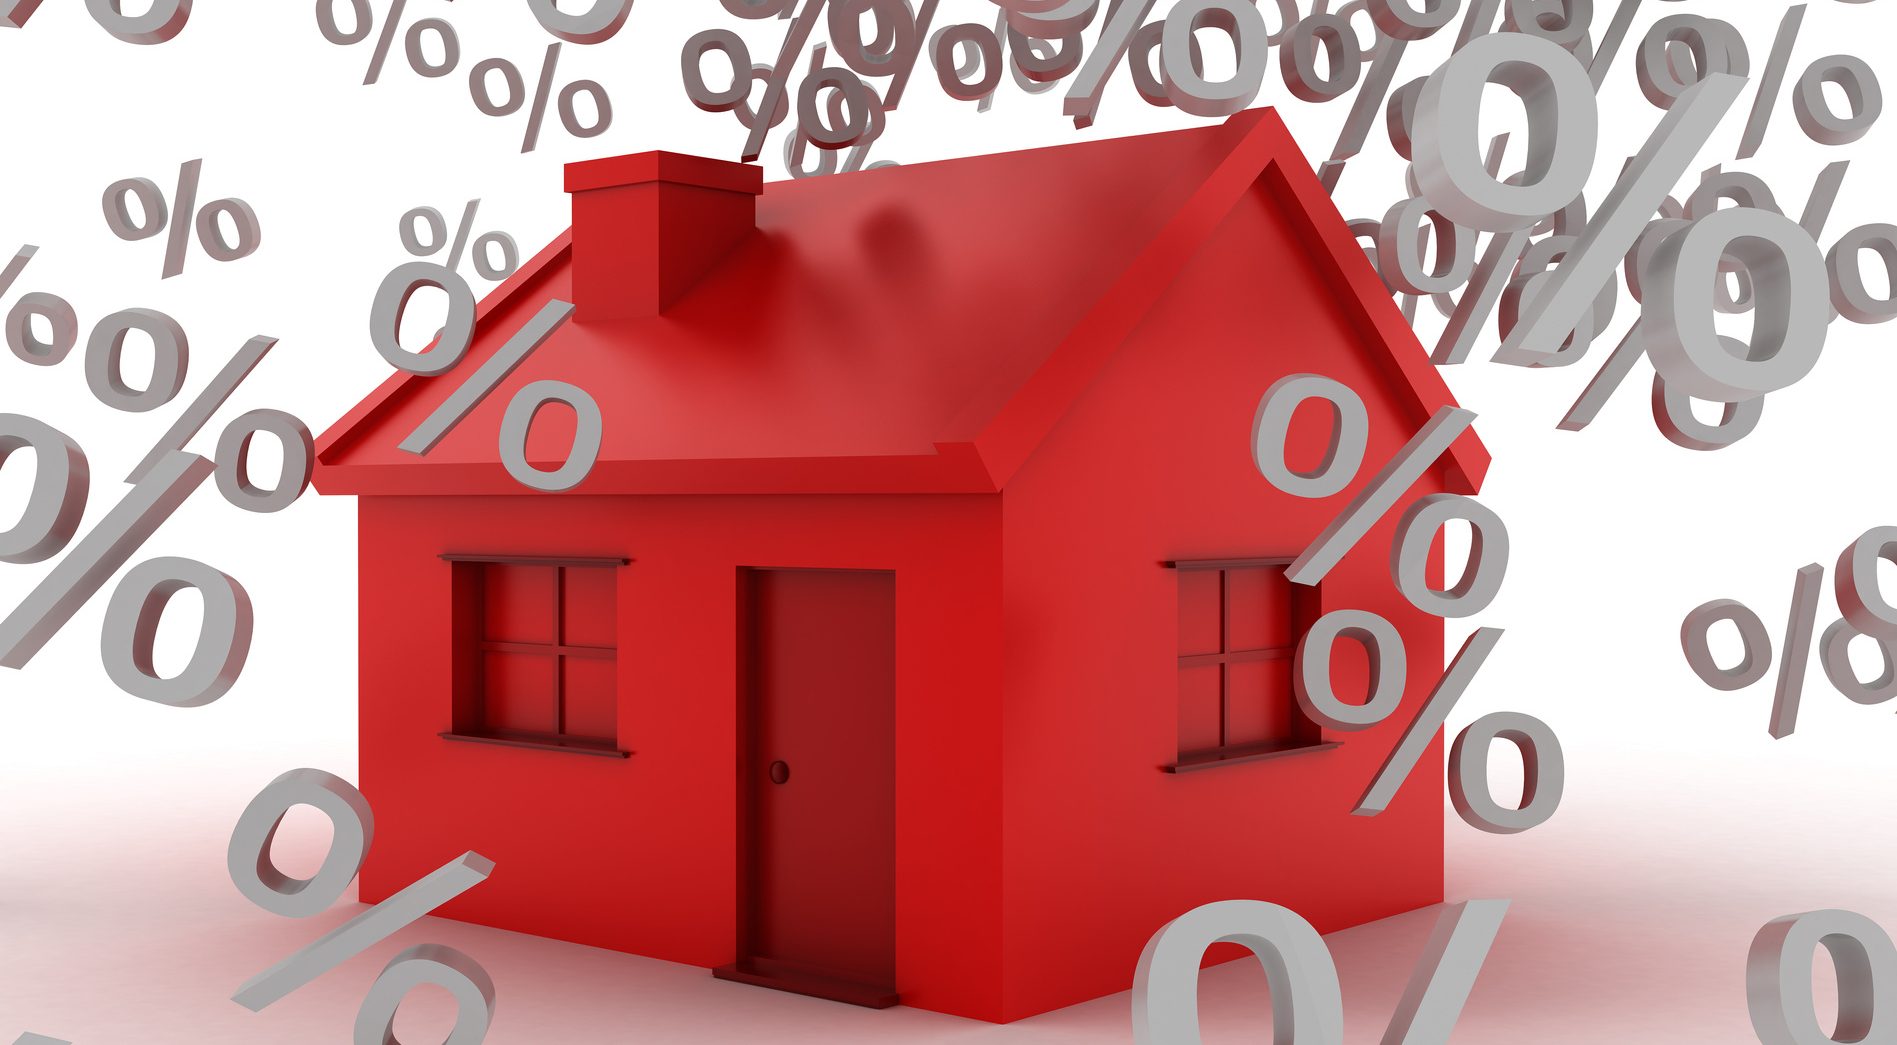 mortgage rates pandemic